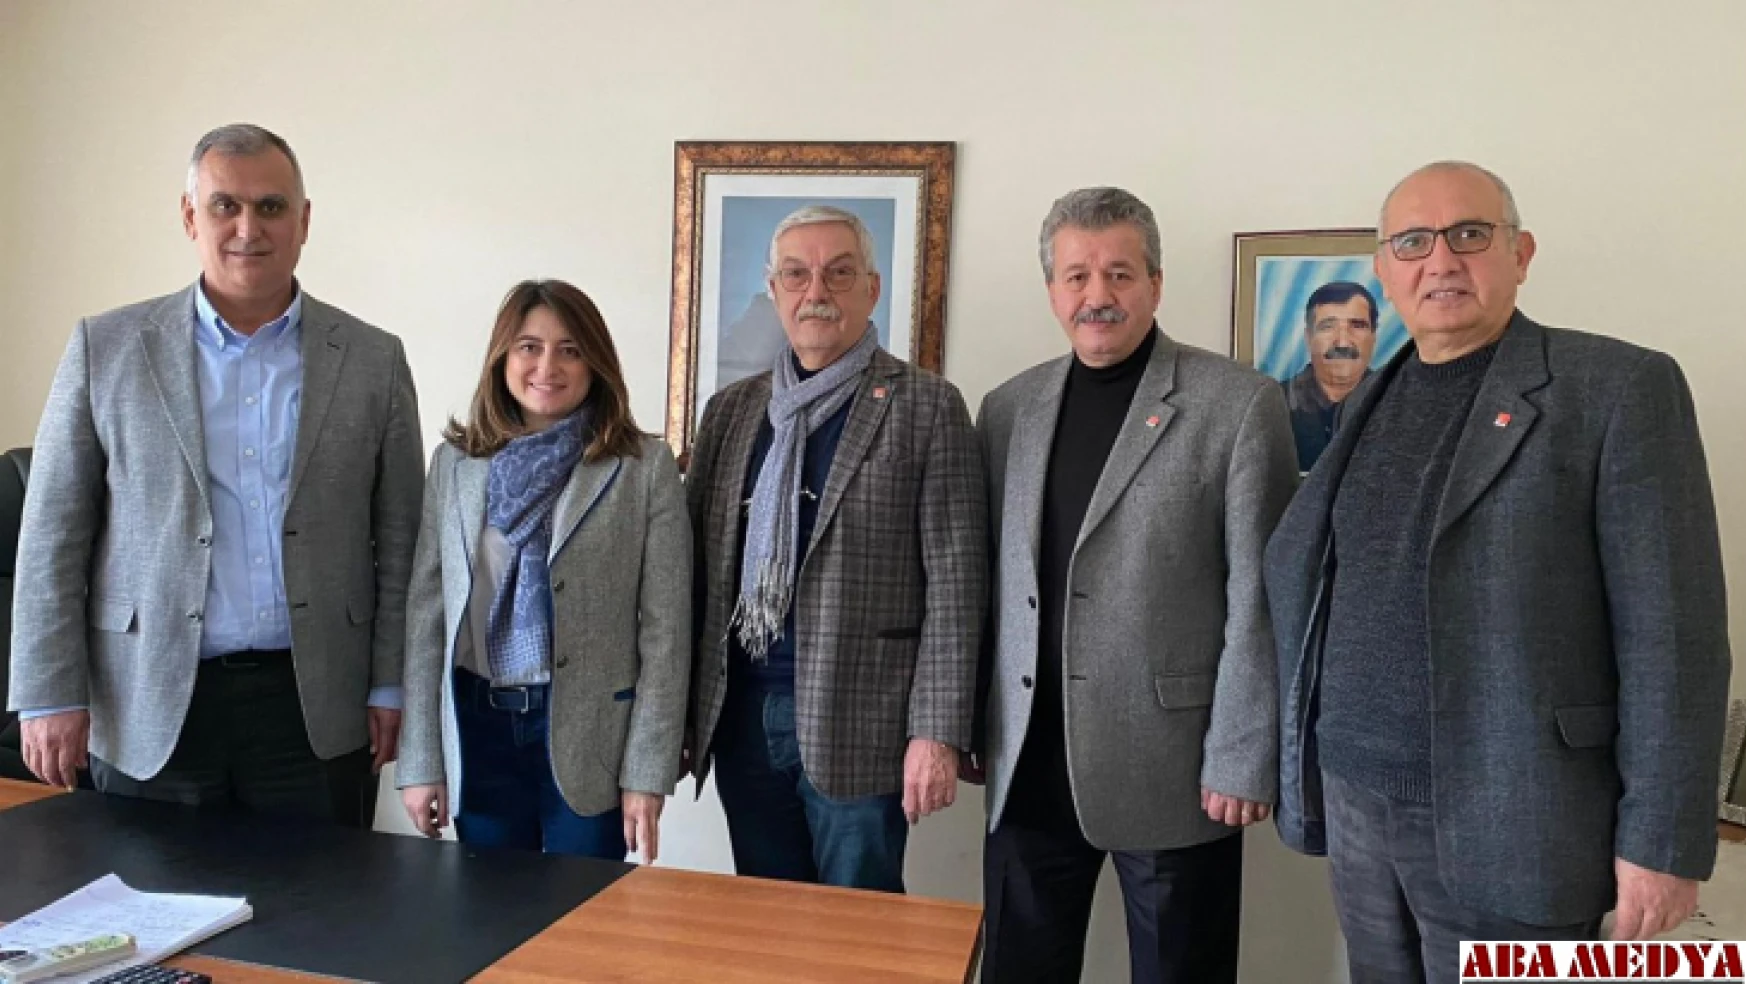 CHP Bartın Milletvekili Bankoğlu'ndan Aba Medya'ya Ziyaret